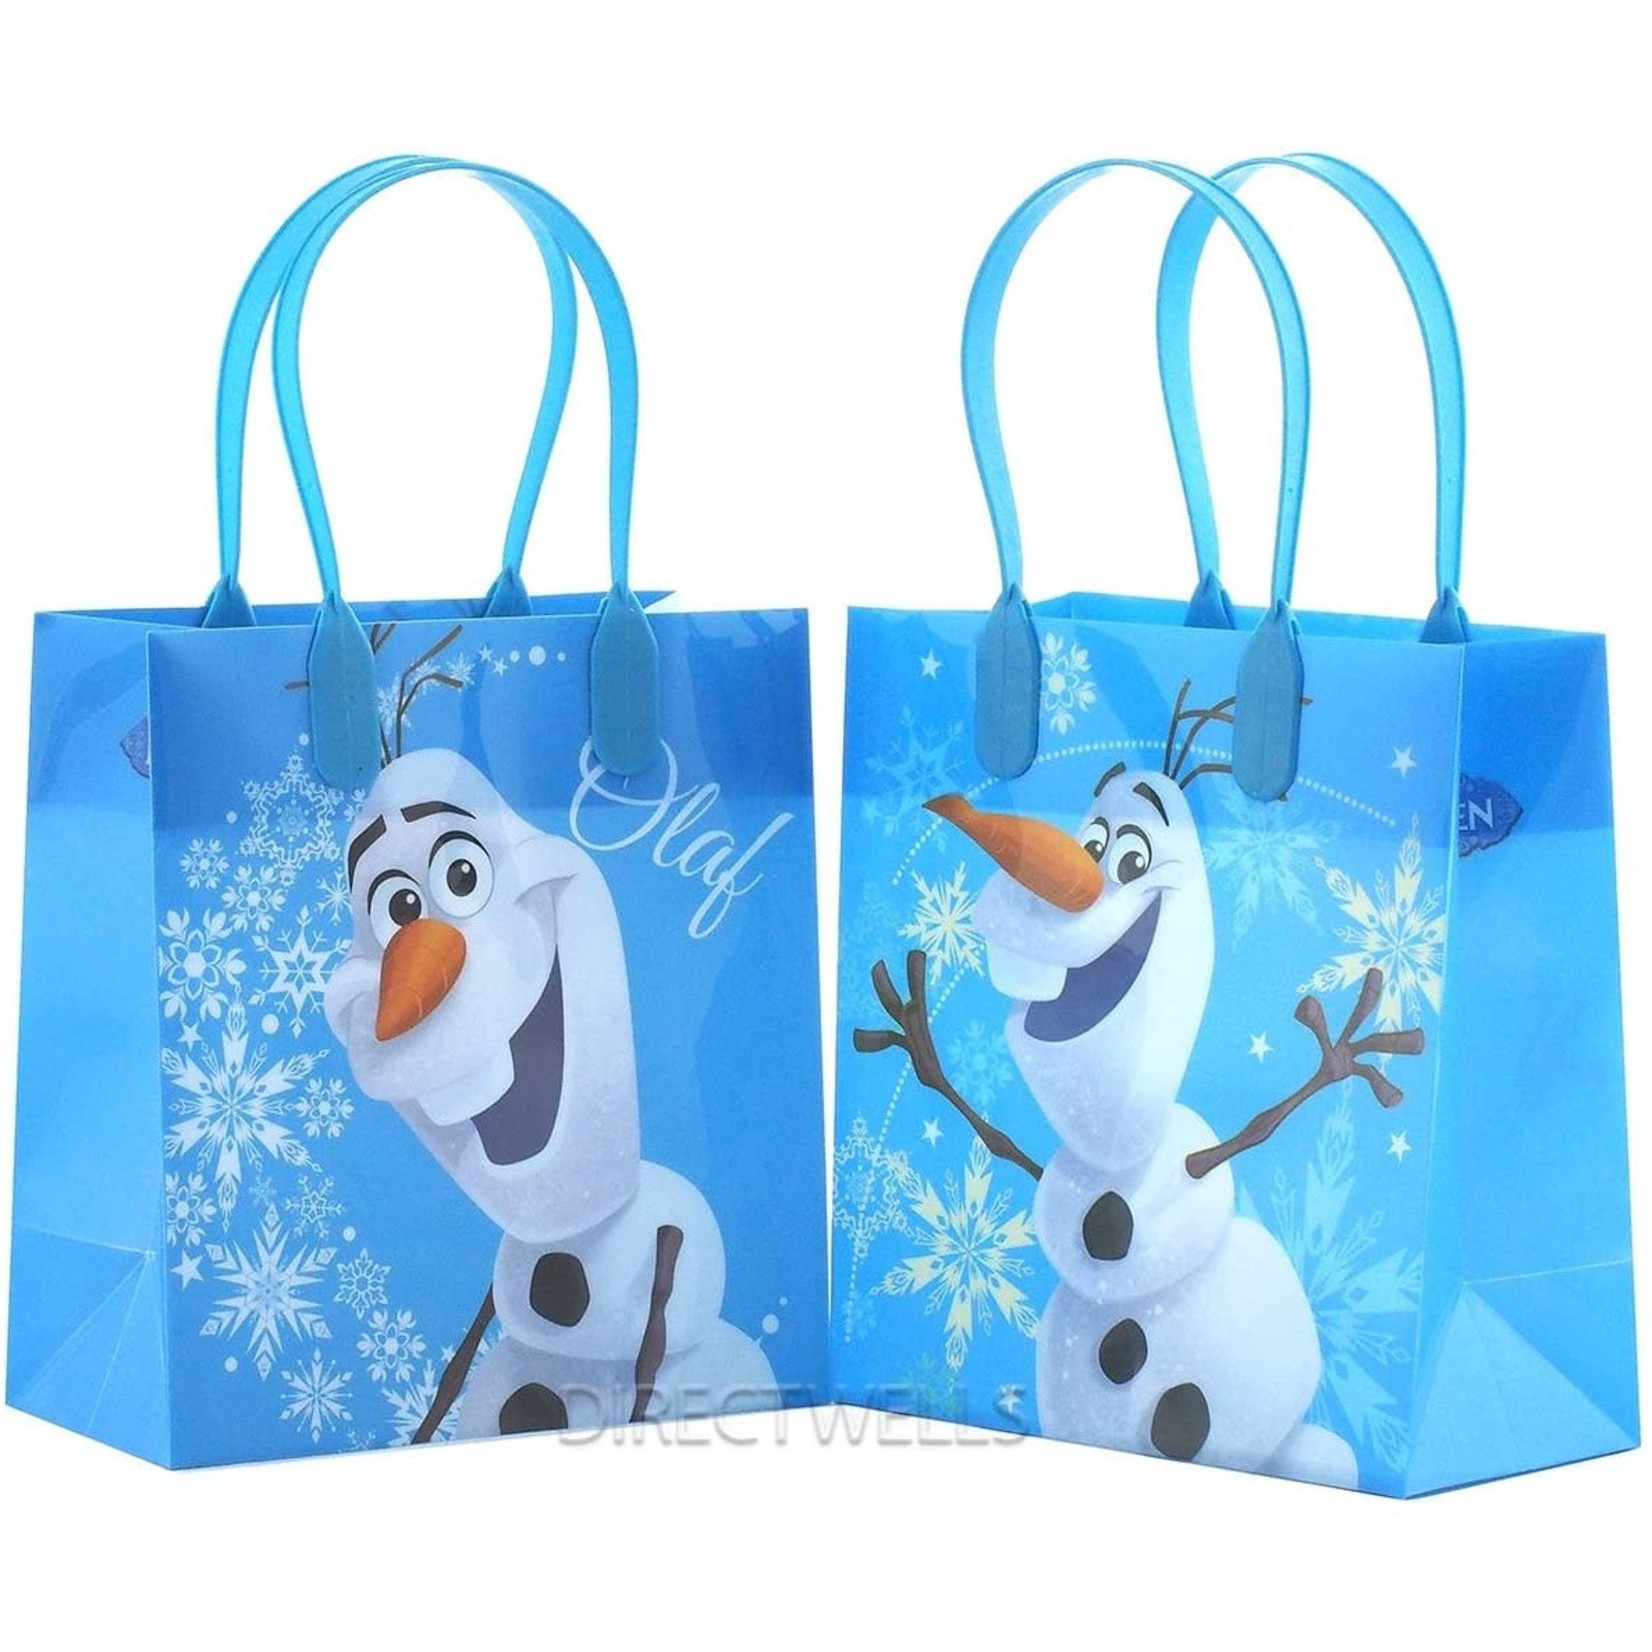 Frozen Olaf Plastic Treat Bags 12ct